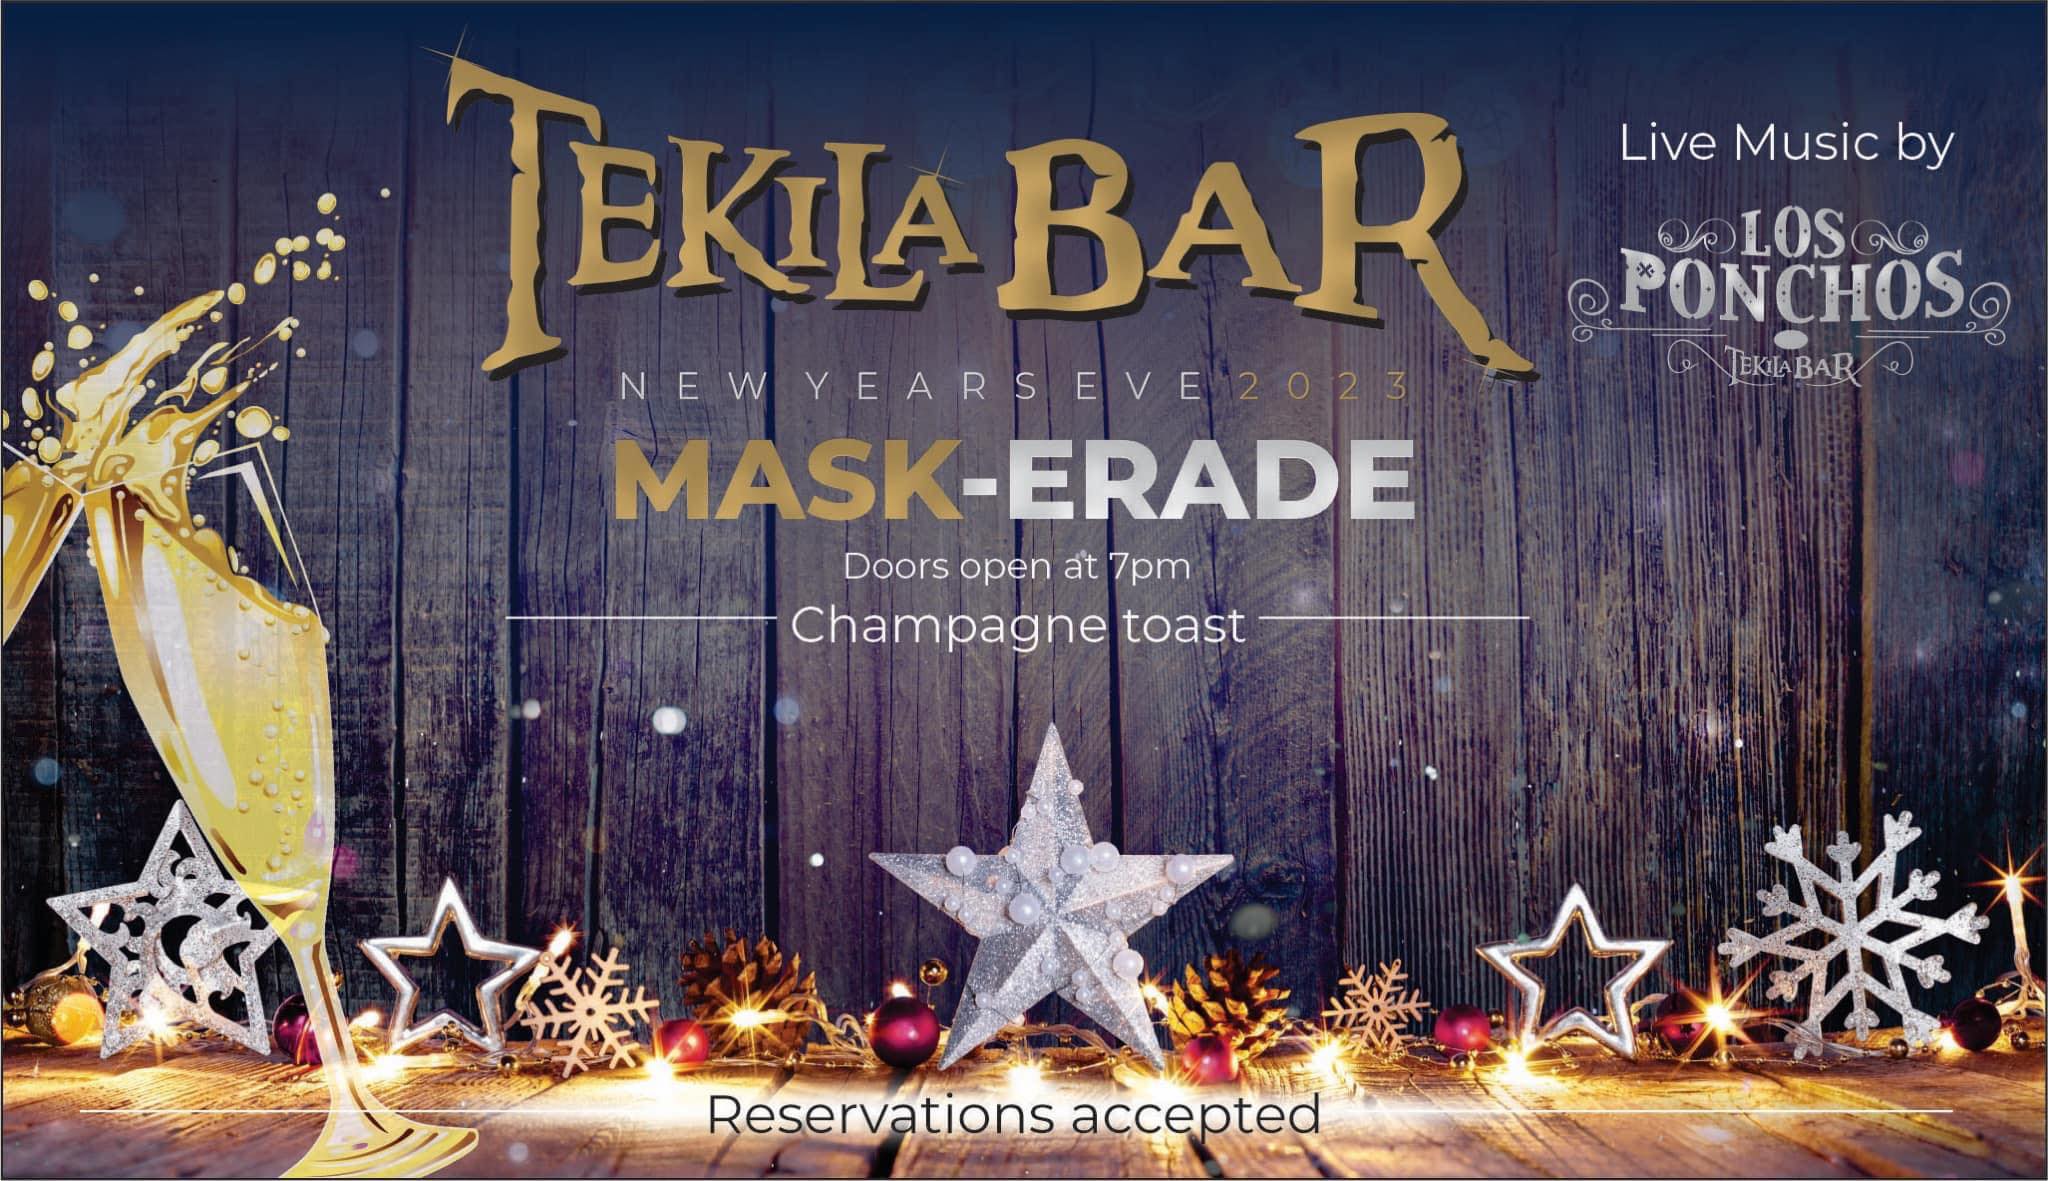 Tekila-New-Years-Mask-Erade-22 Tekila Bar New Year's Mask-Erade